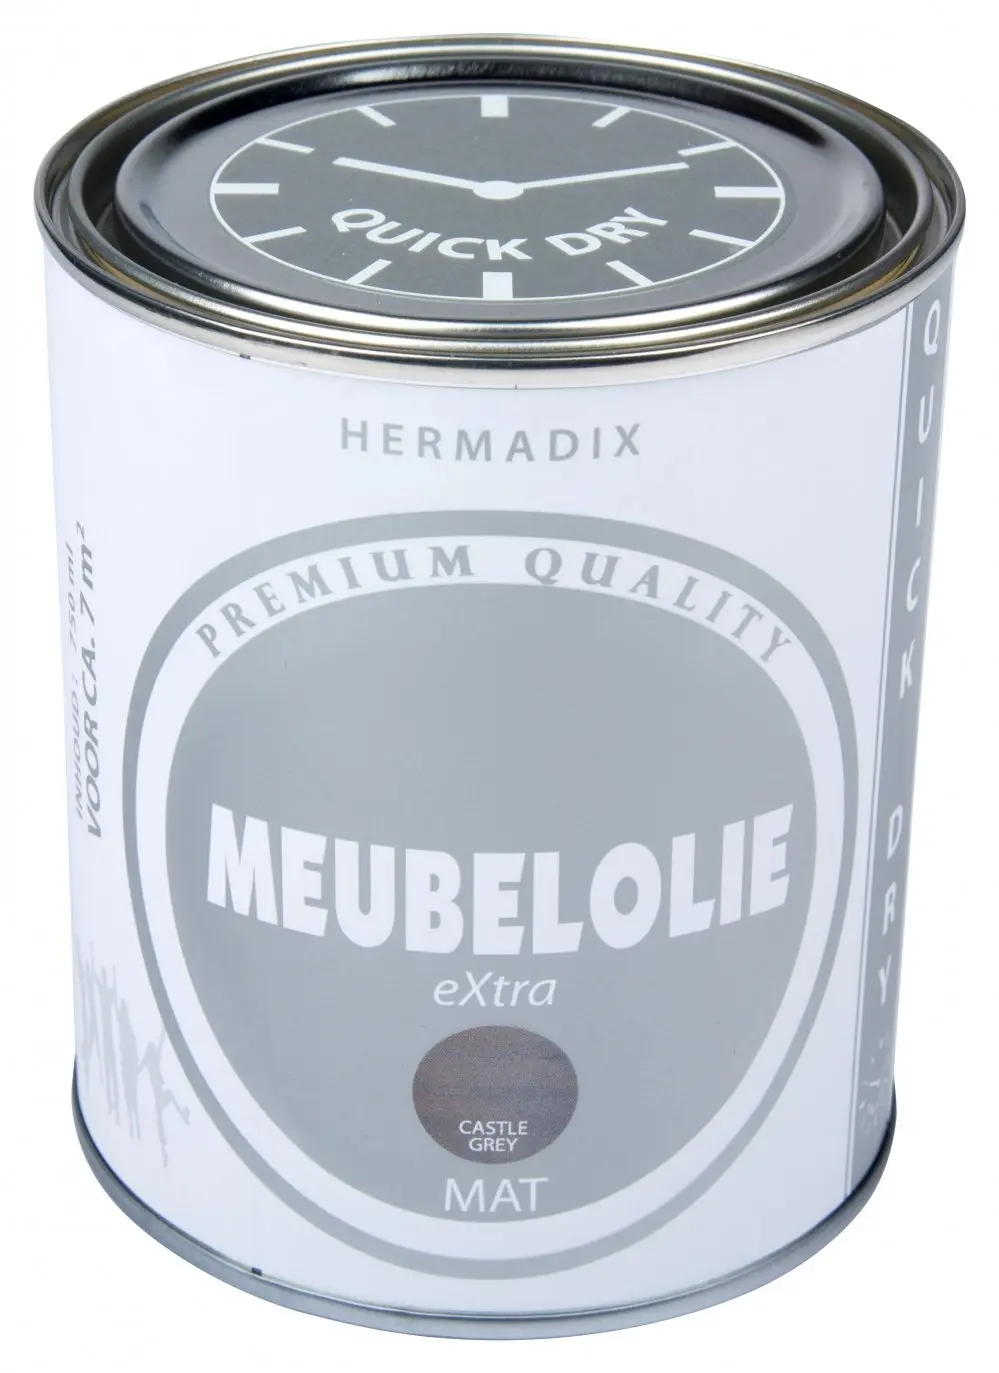 Hermadix - hermadix-meubellolie-extra-mat-castle-grey1-verfcompleet.nl